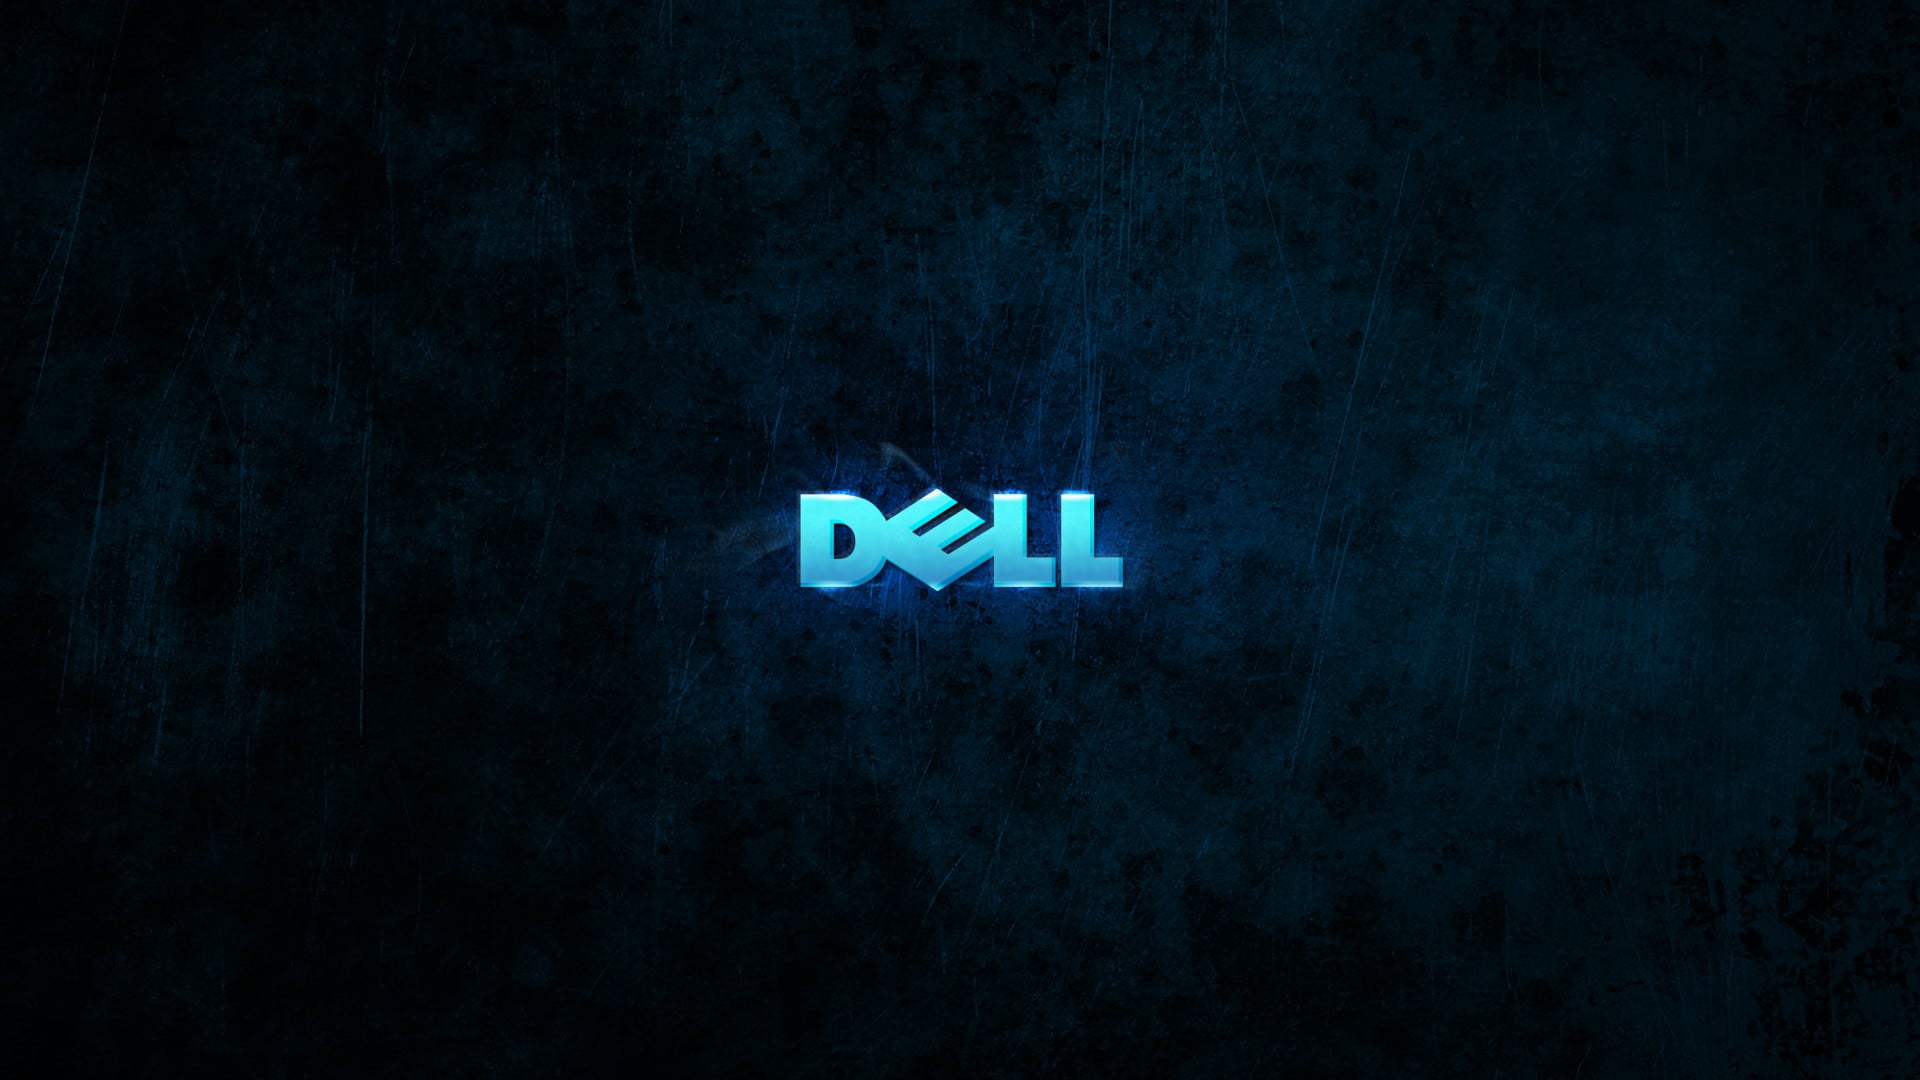 dark, blue, Dell, illuminated, communication, sign, guidance